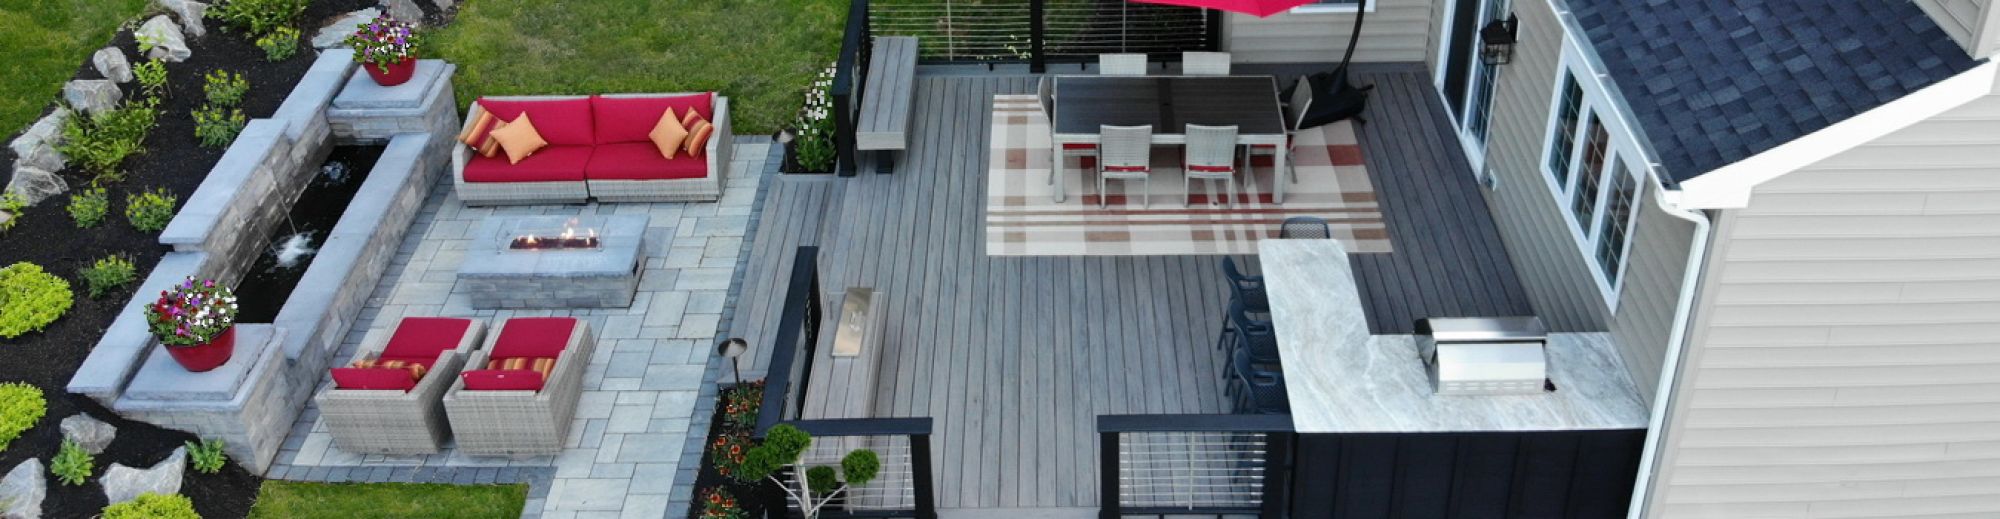 landscape design firm rendering of a home's backyard outdoor space | Burkholder Brothers Landscape